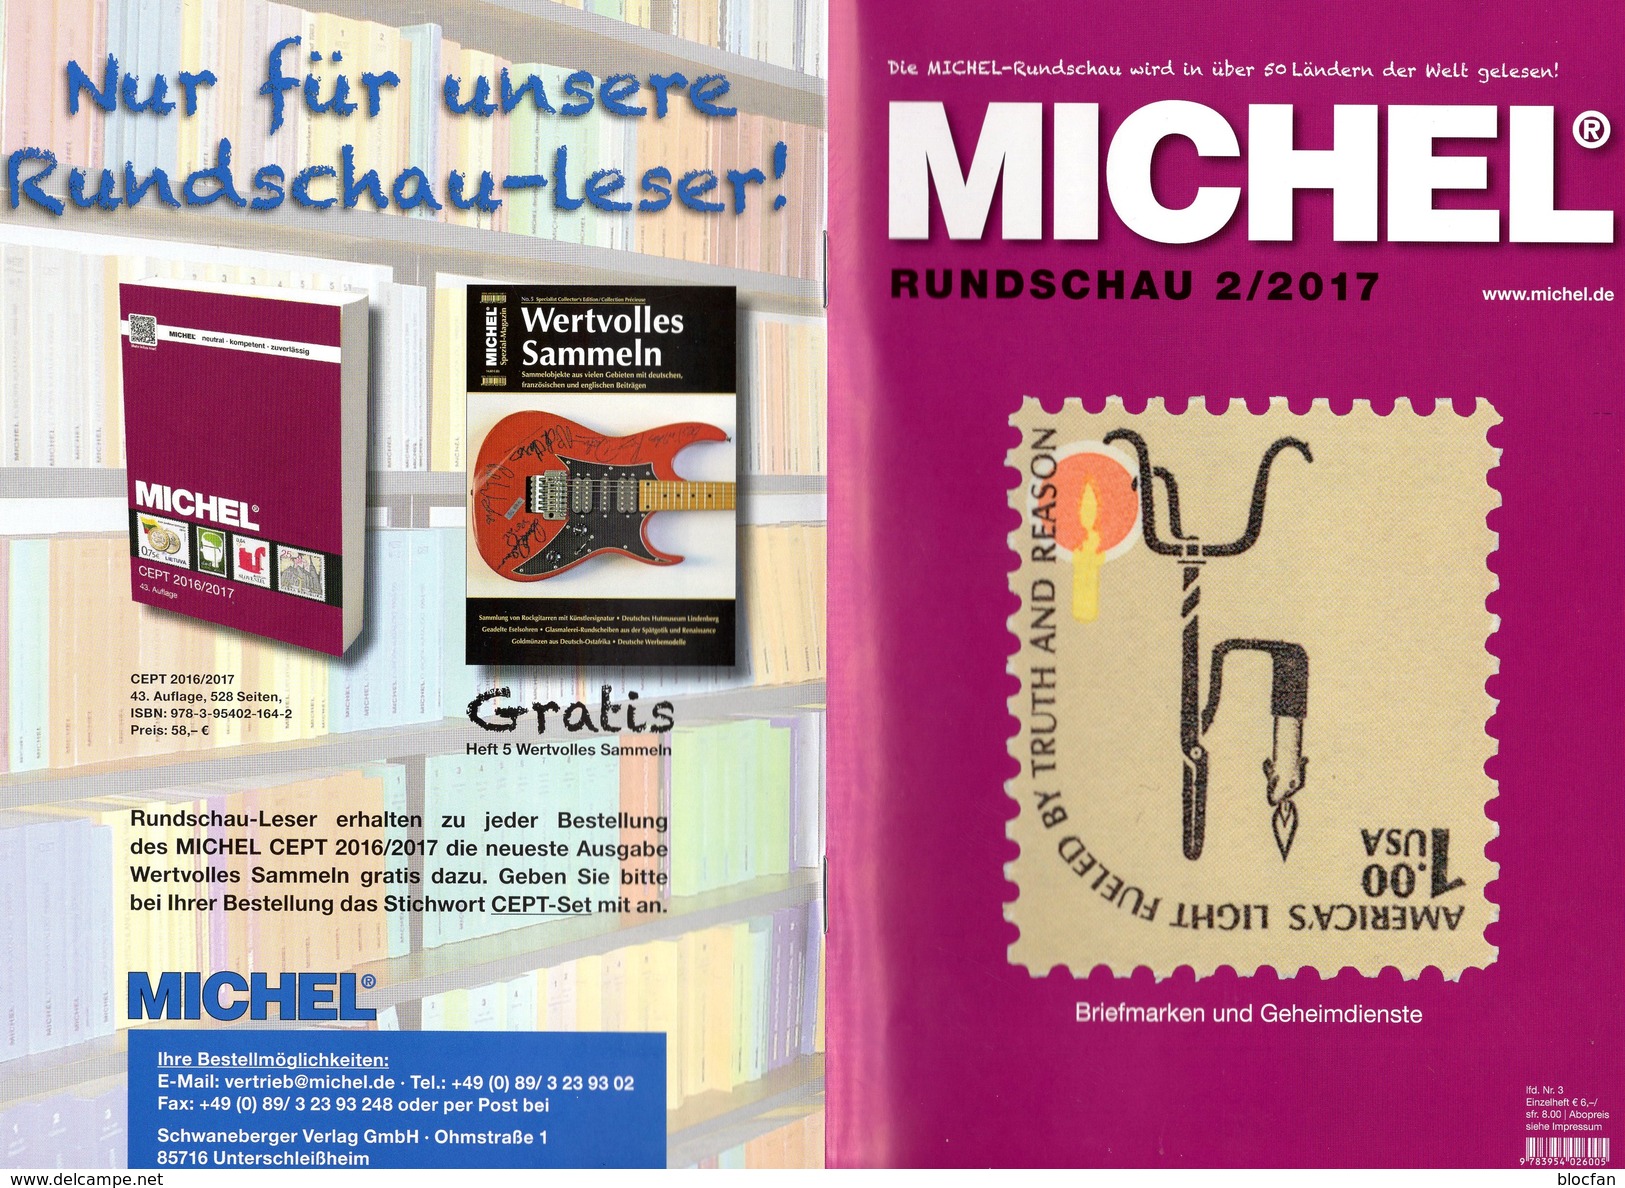 MICHEL Briefmarken Rundschau 2/2017 new 6&euro; stamps of the world catalogue/magacine of Germany ISBN 978-3-95402-600-5